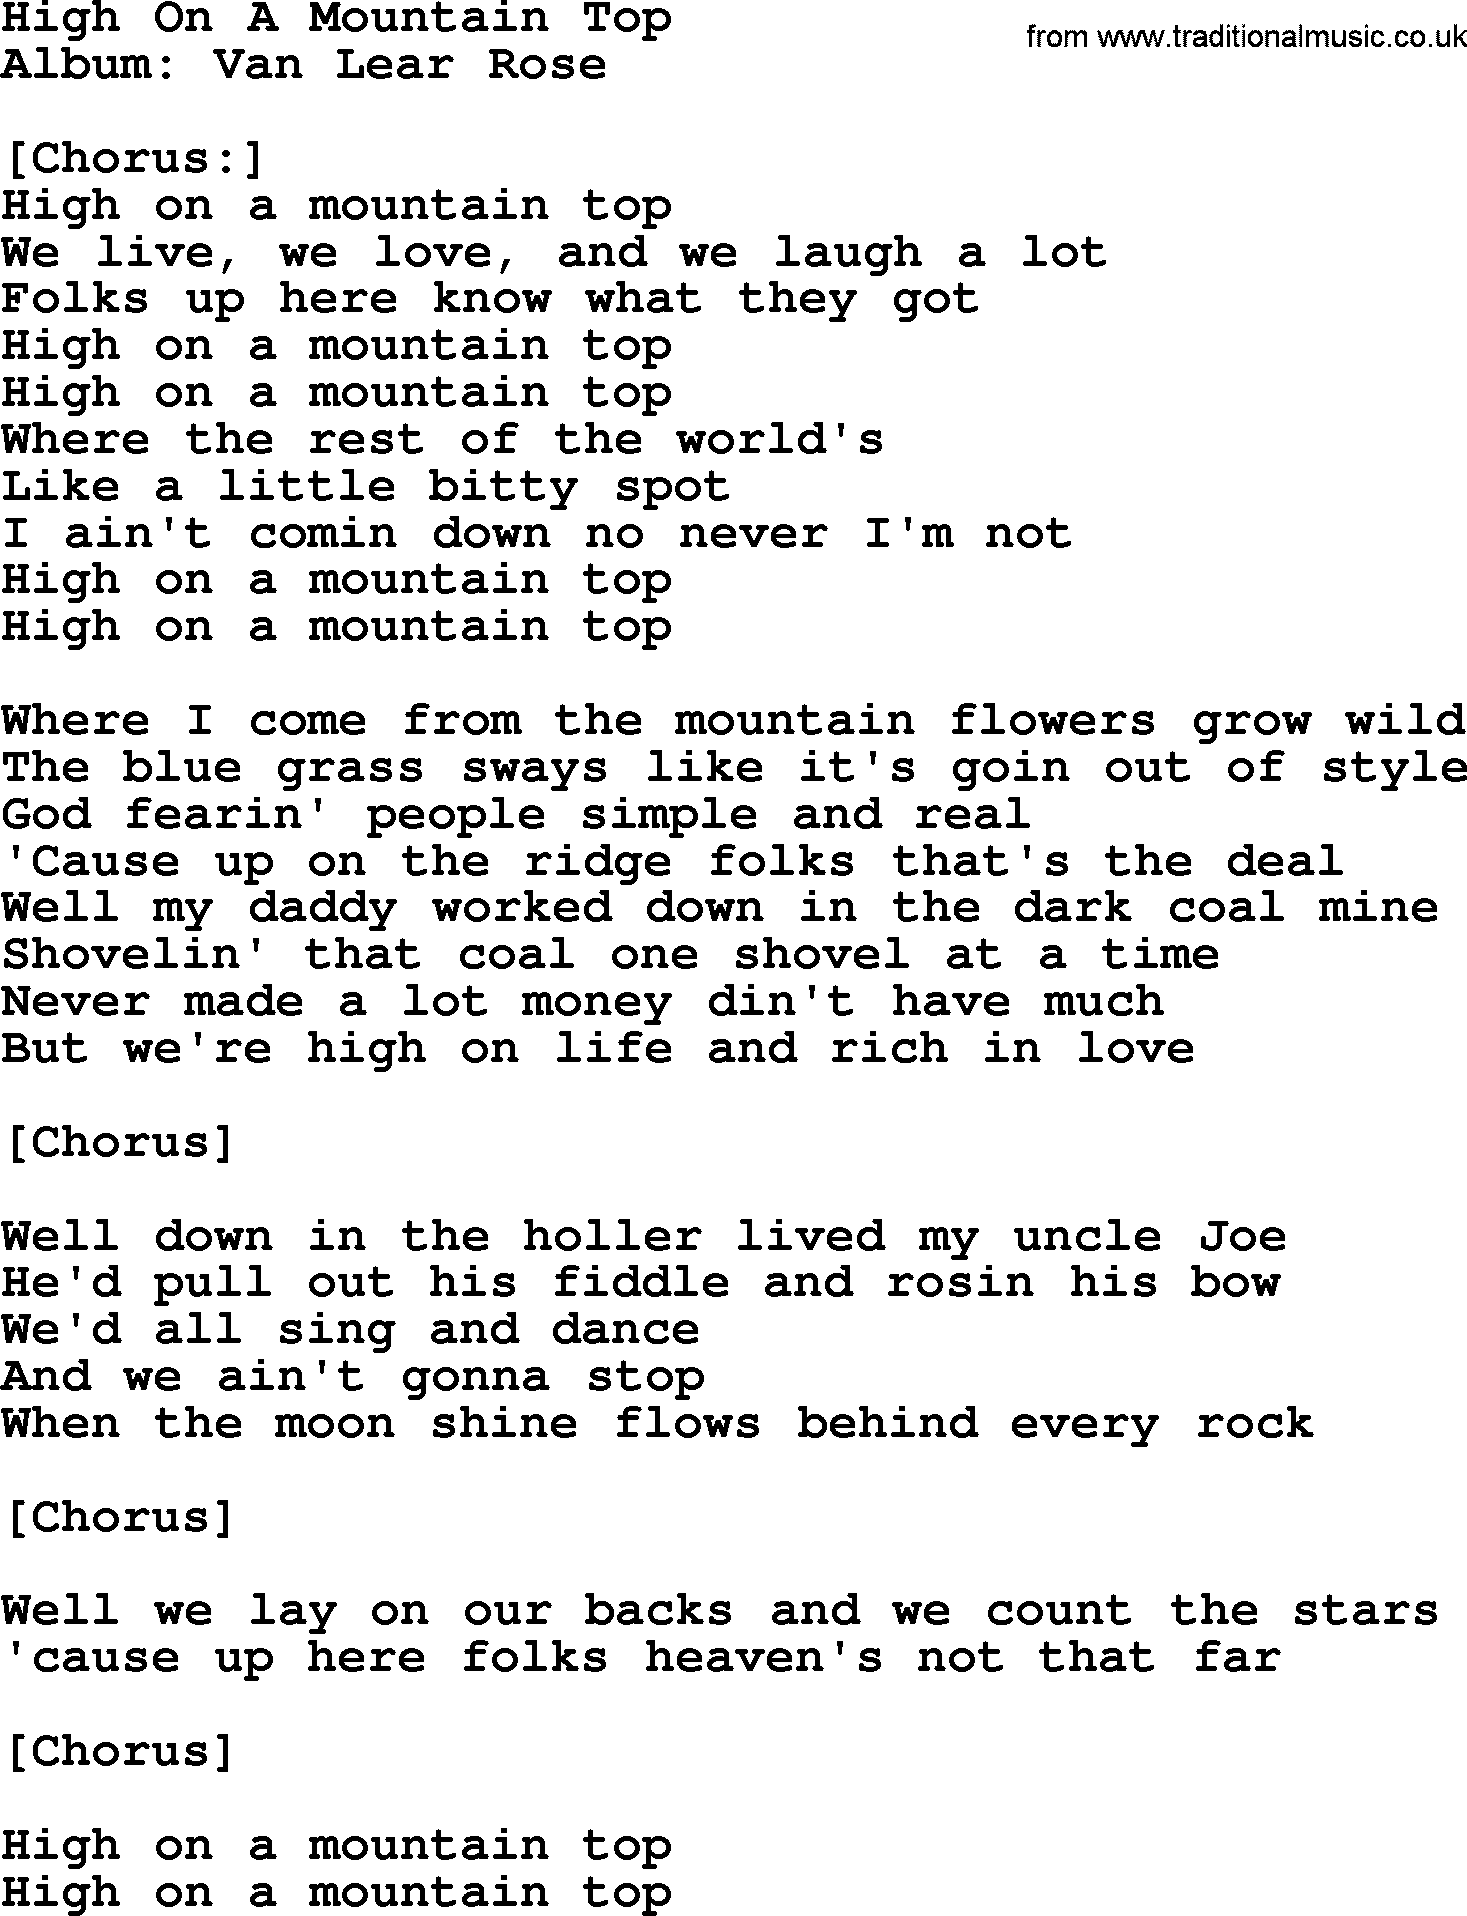 Loretta Lynn song: High On A Mountain Top lyrics